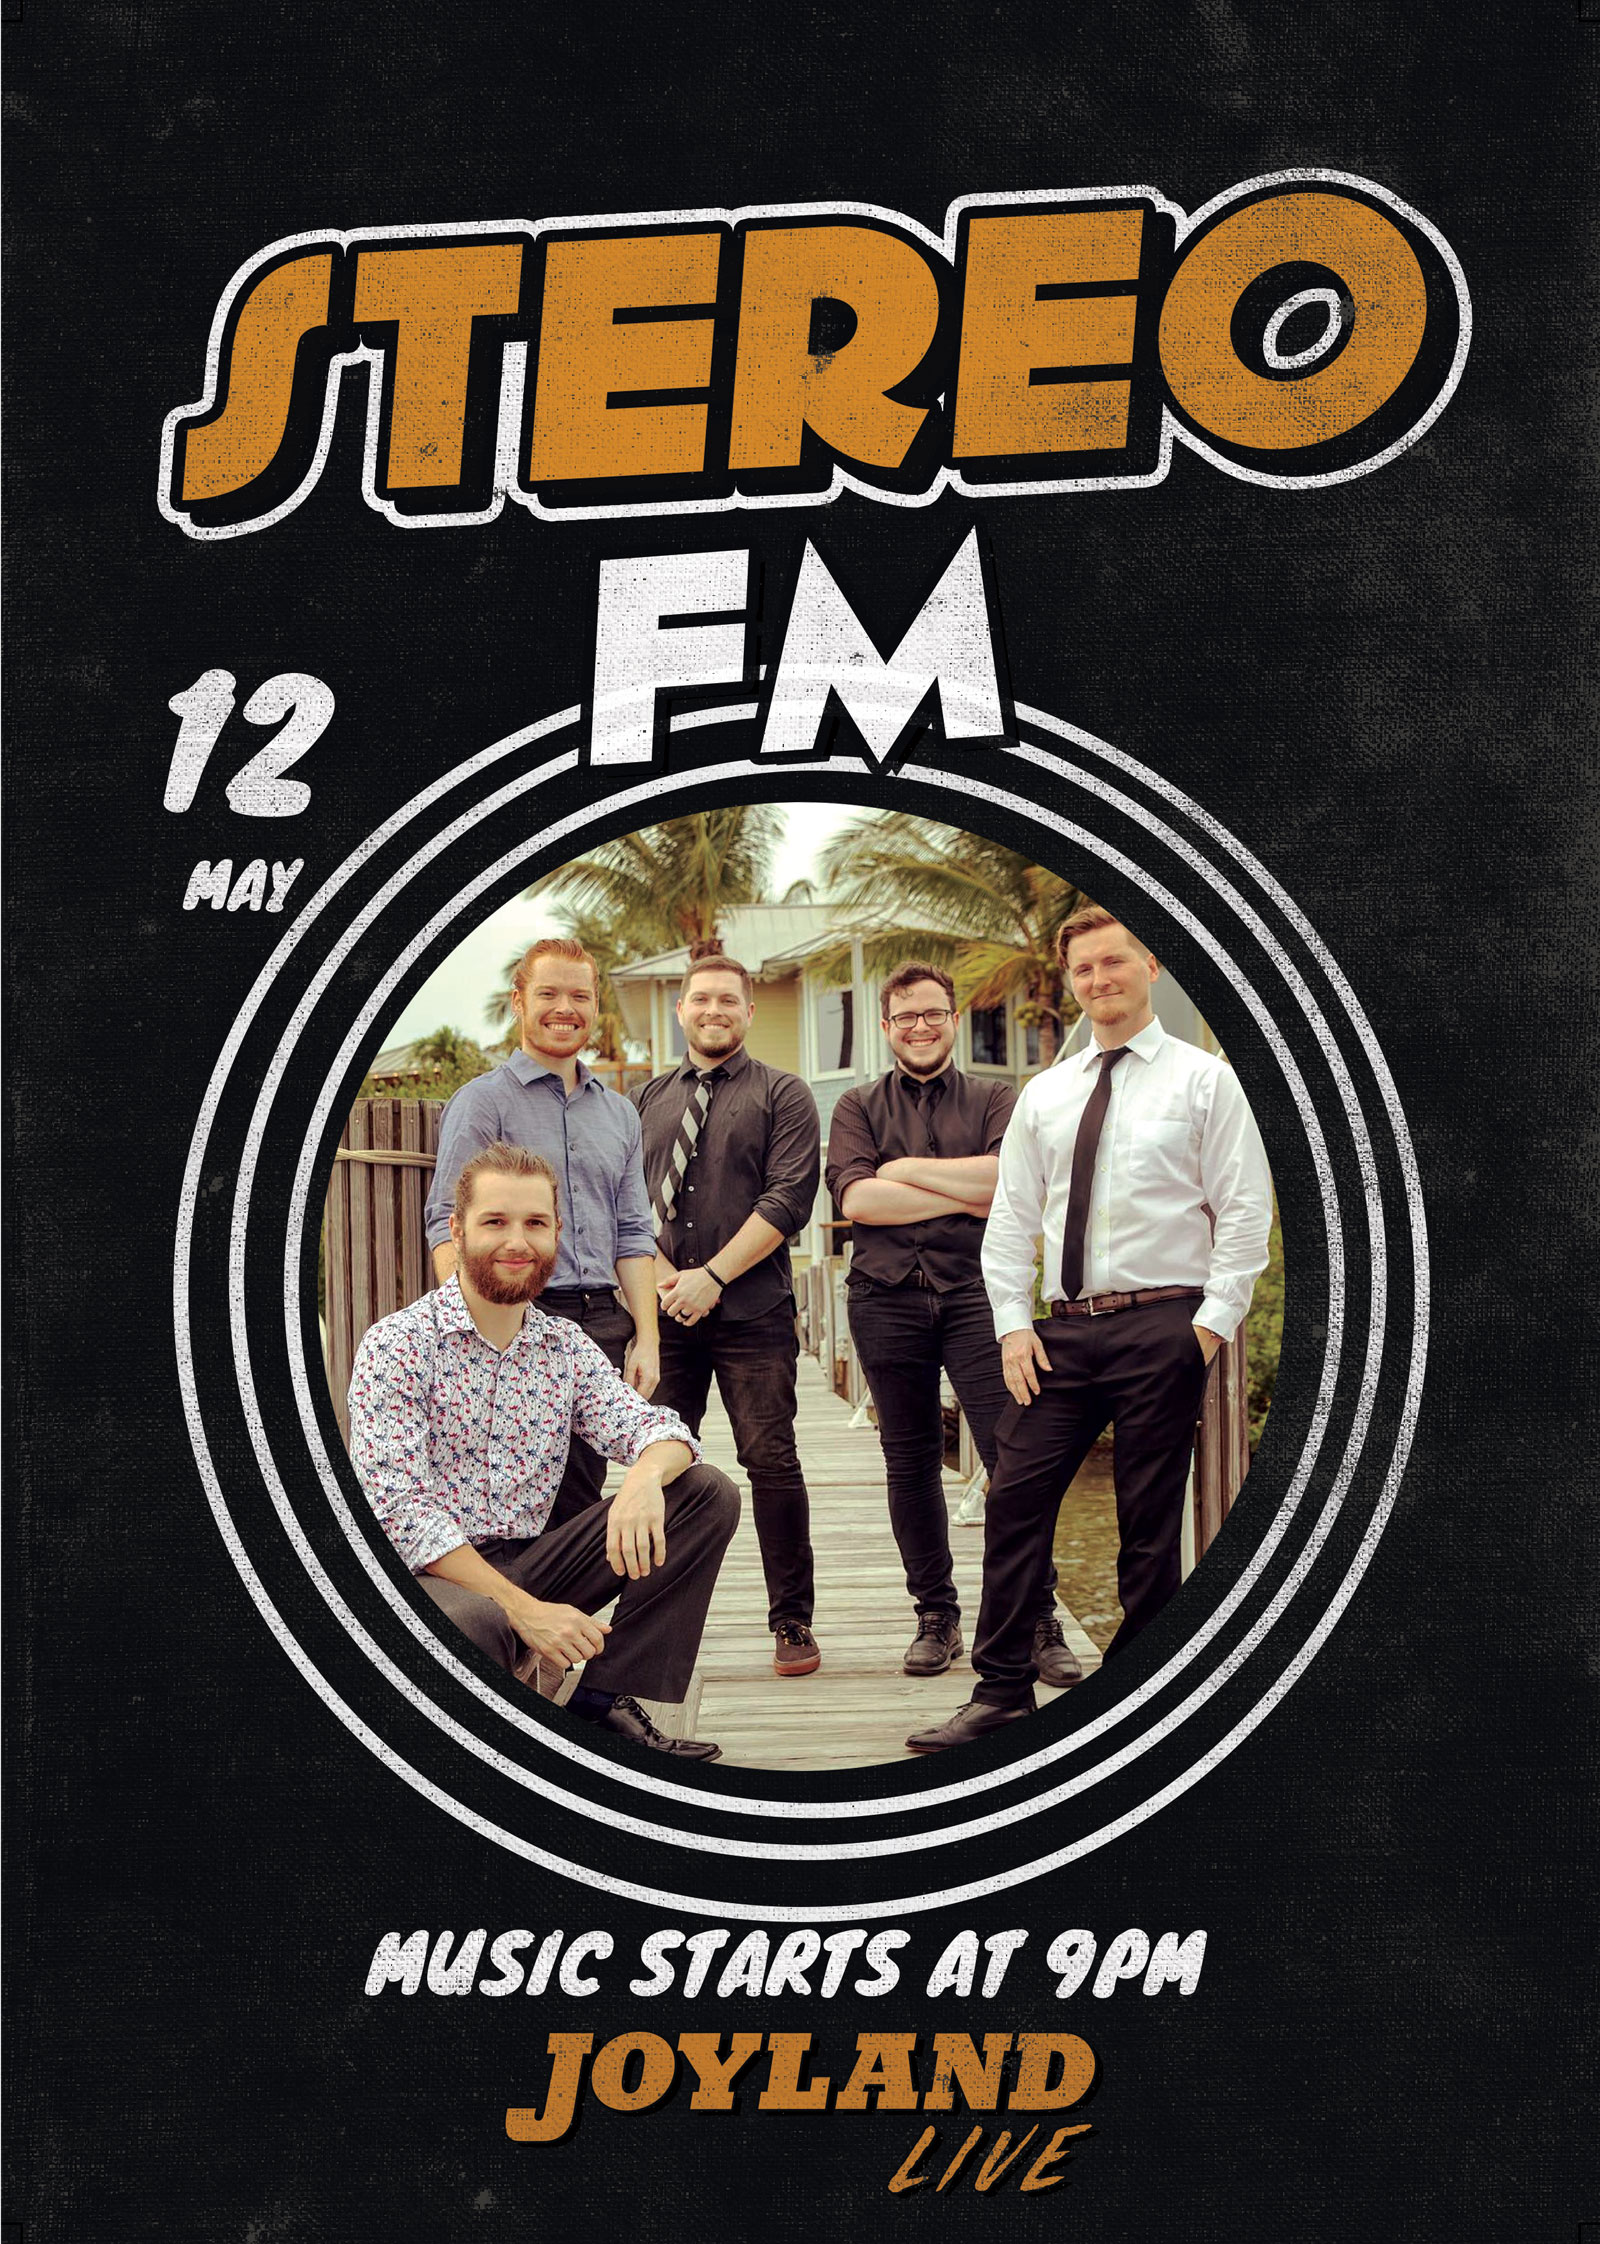 joyland-stereroFM-May